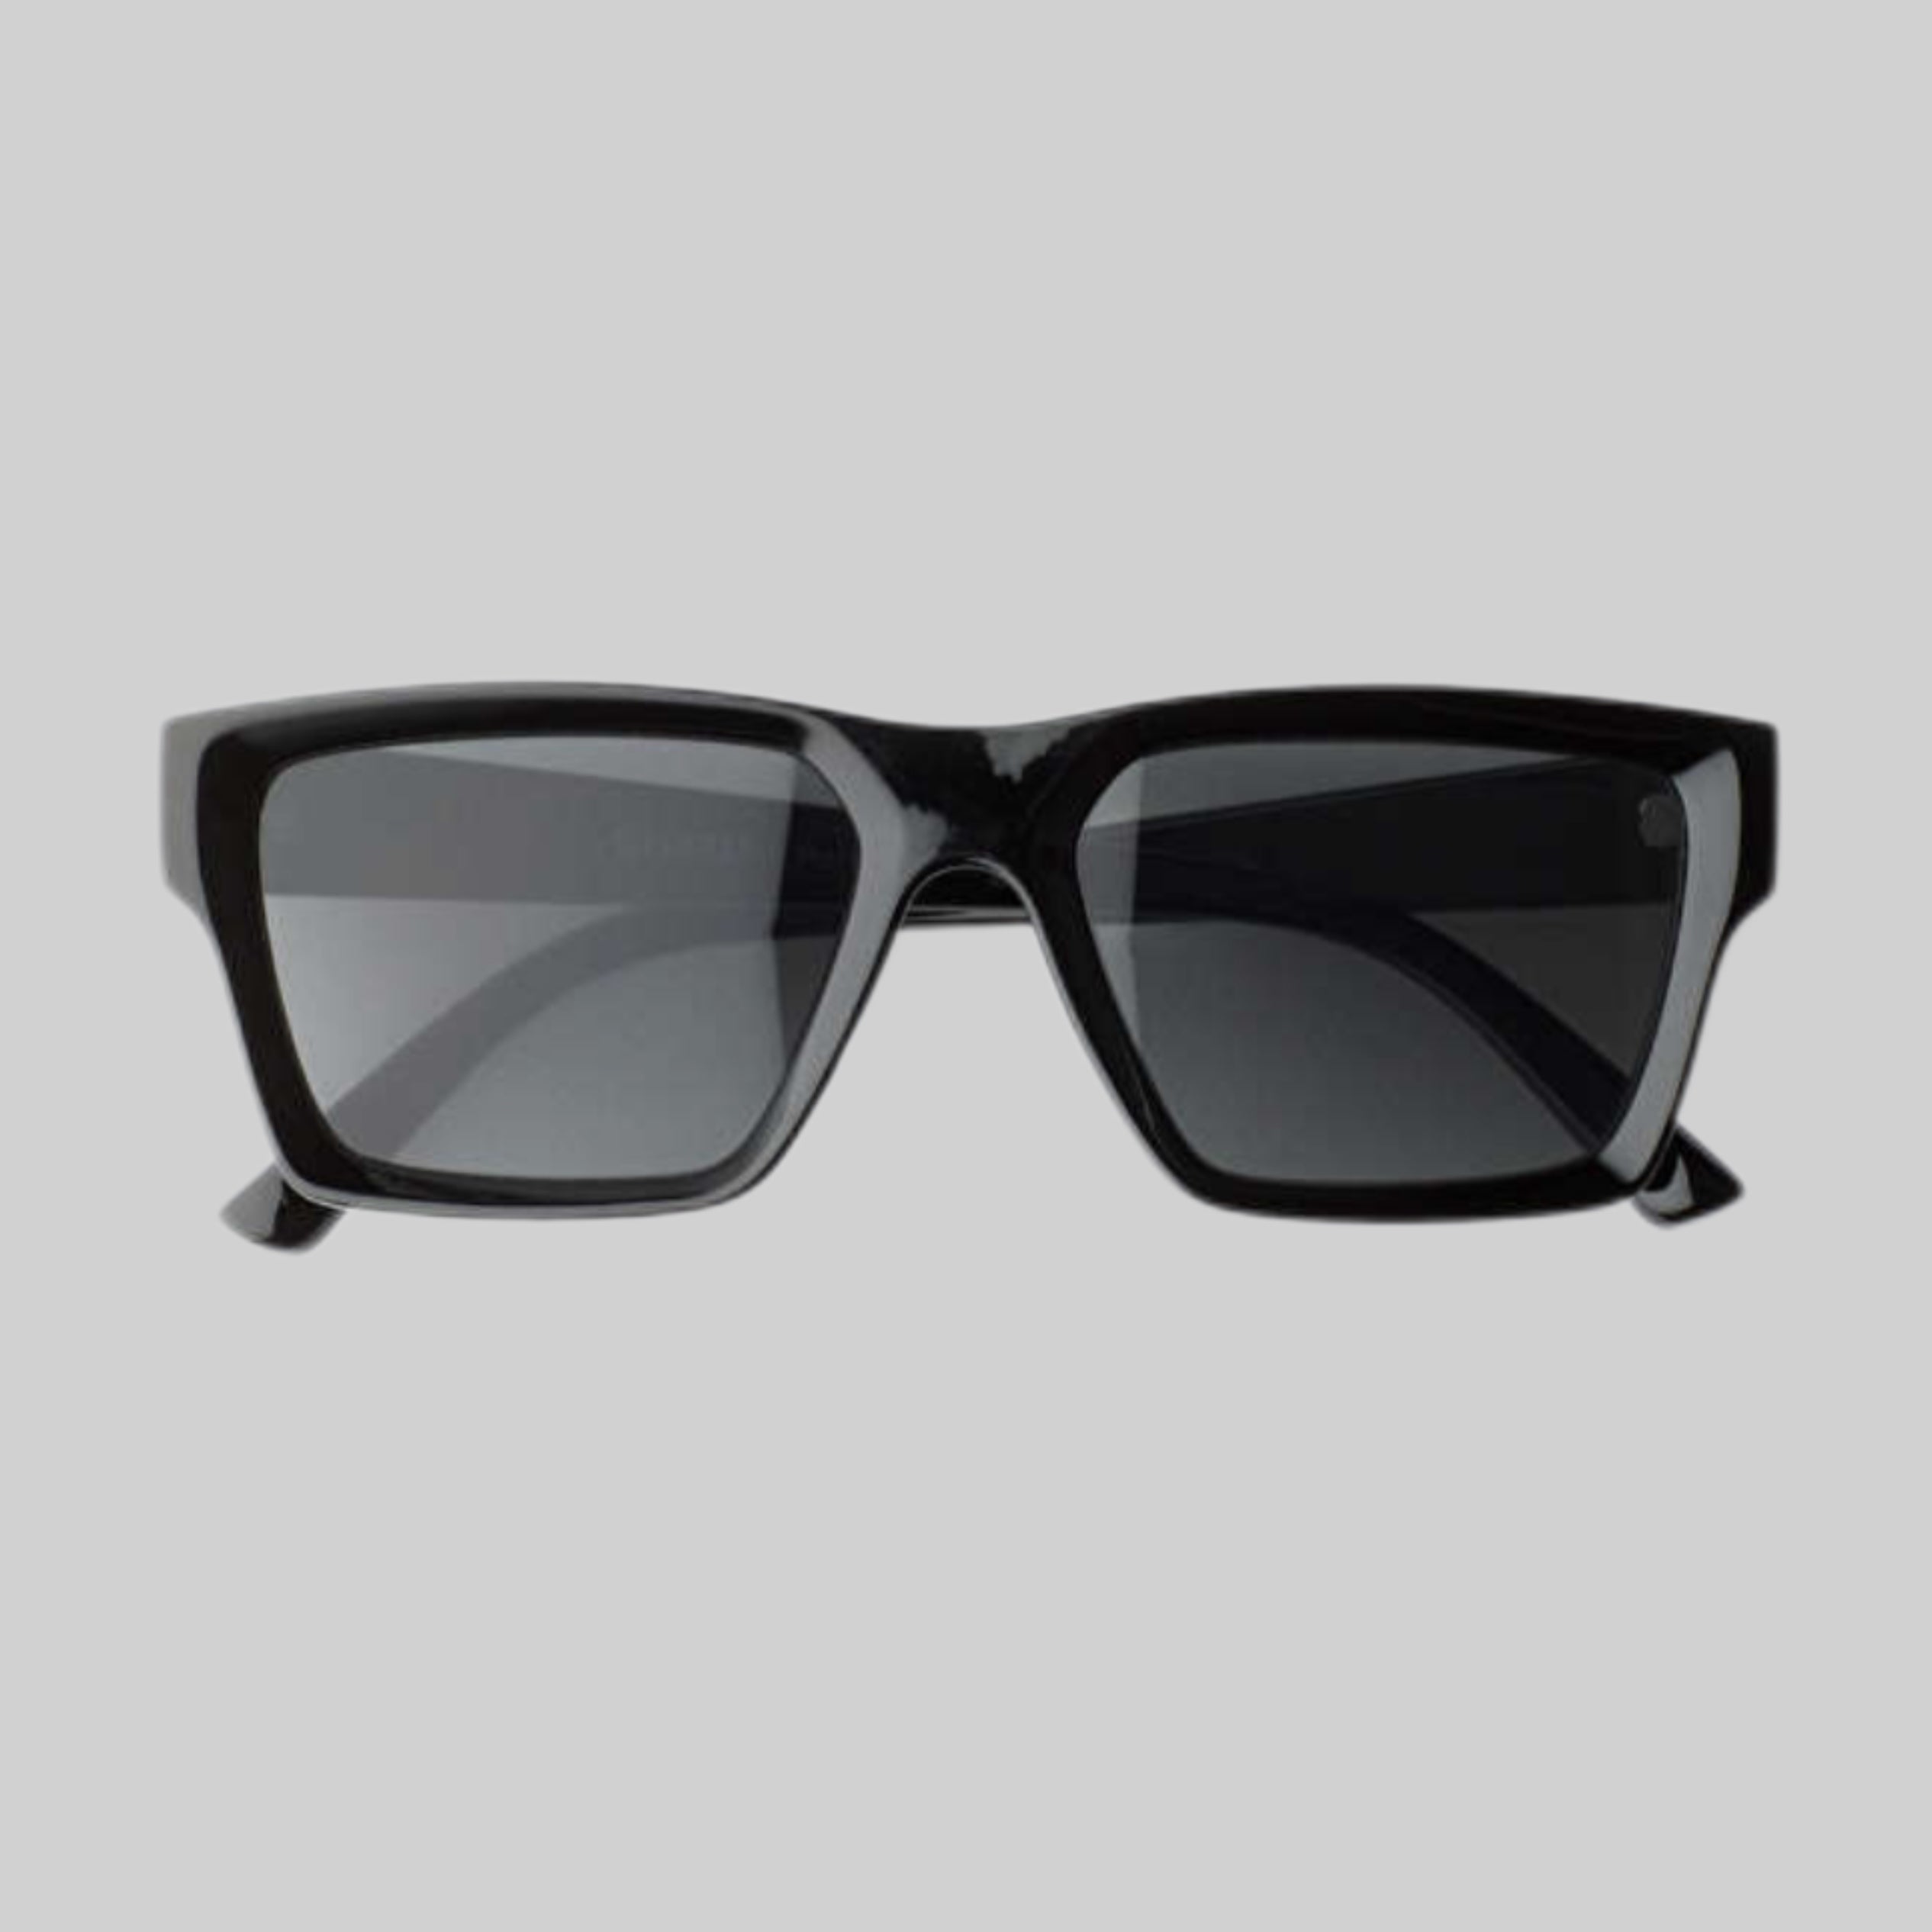 Weekday sunglasses, black, frontside